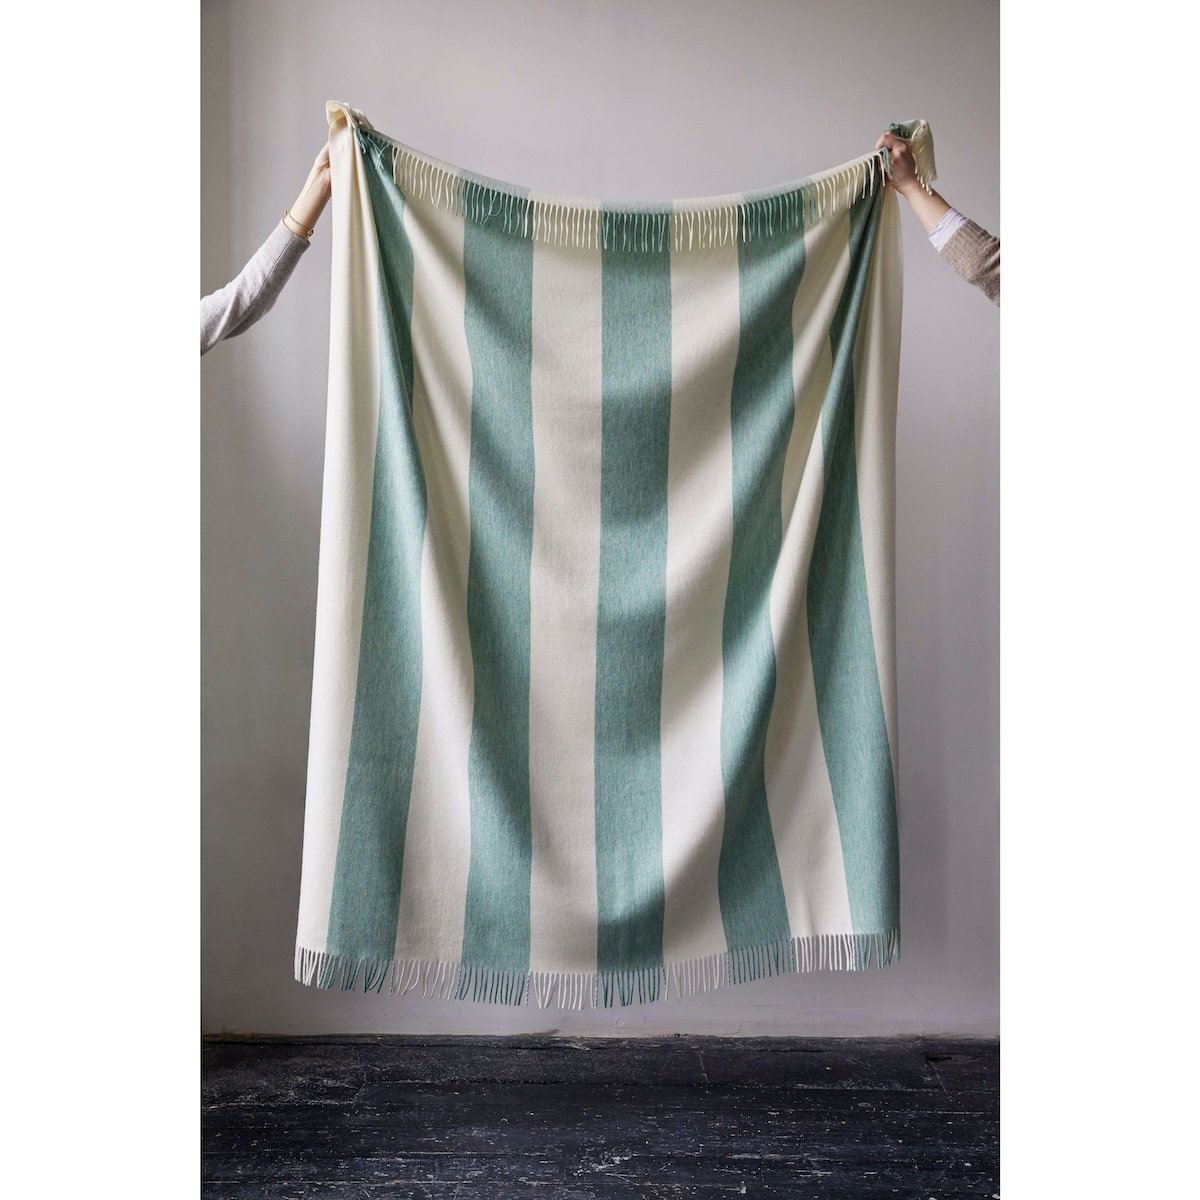 Issy Granger Green Striped Merino Wool Throw Blanket  Edit alt text